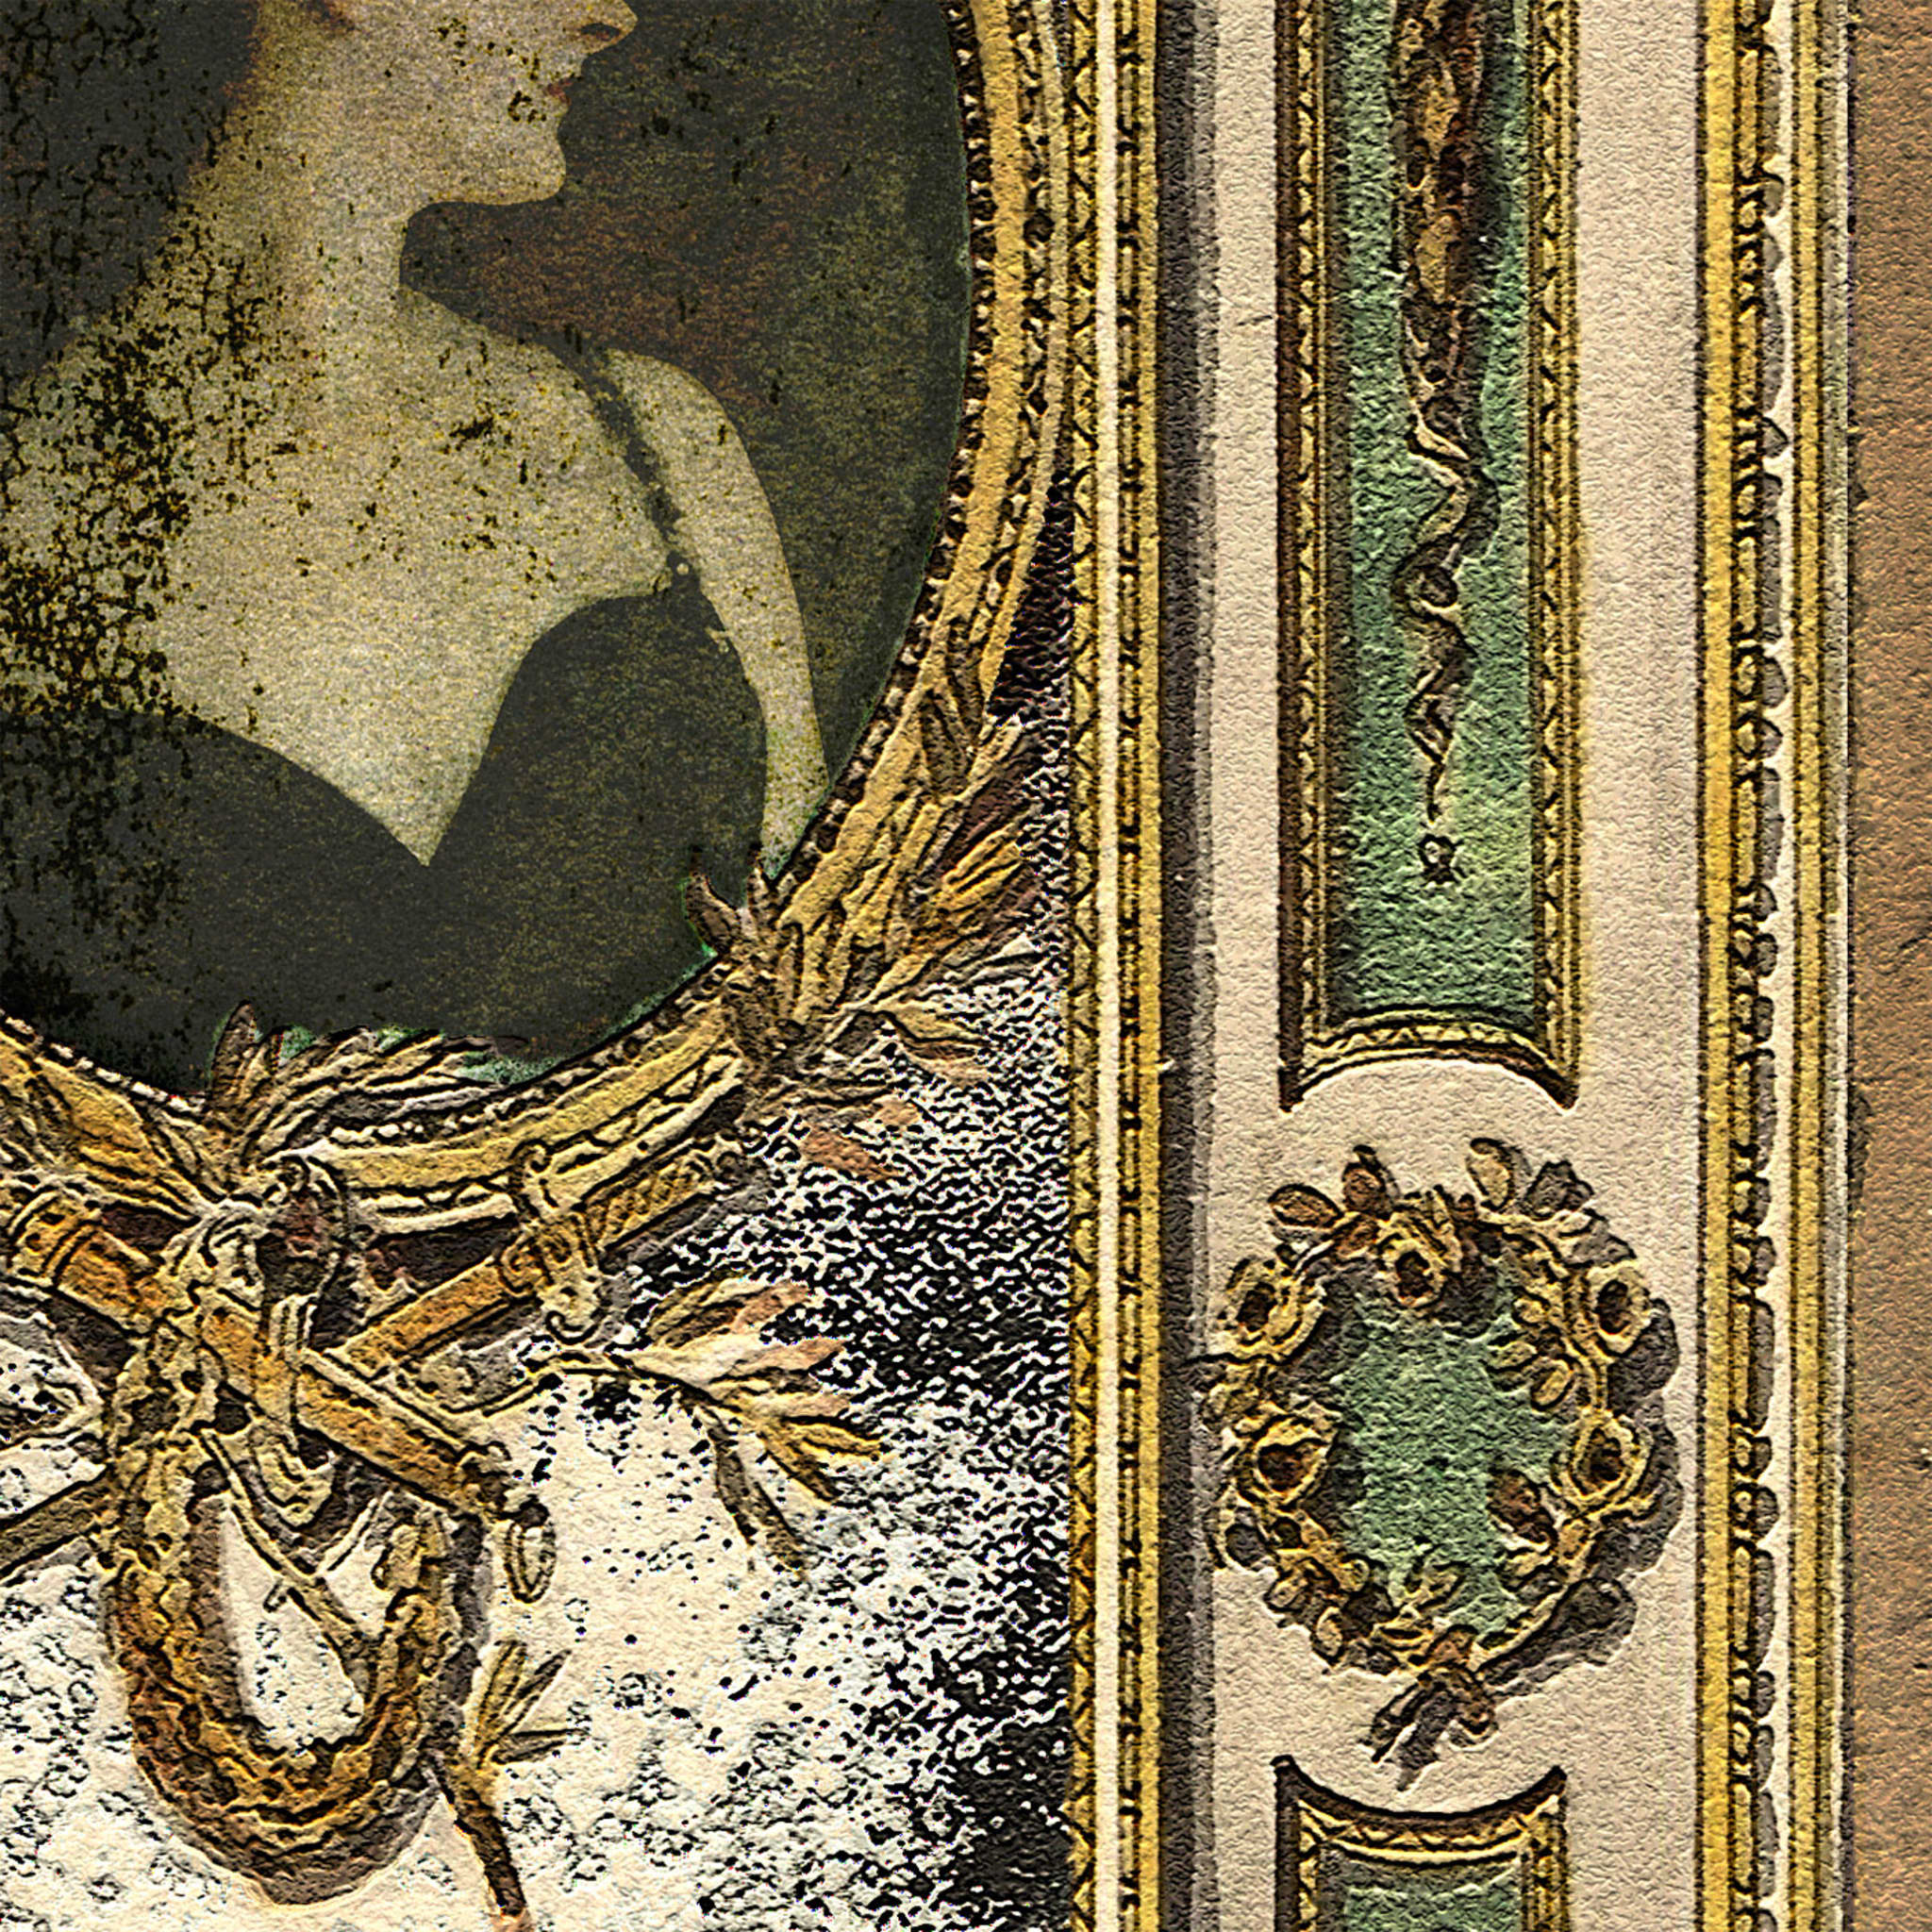 Barocco Decorative Panel #2 by Studio Abitadecò - Alternative view 1